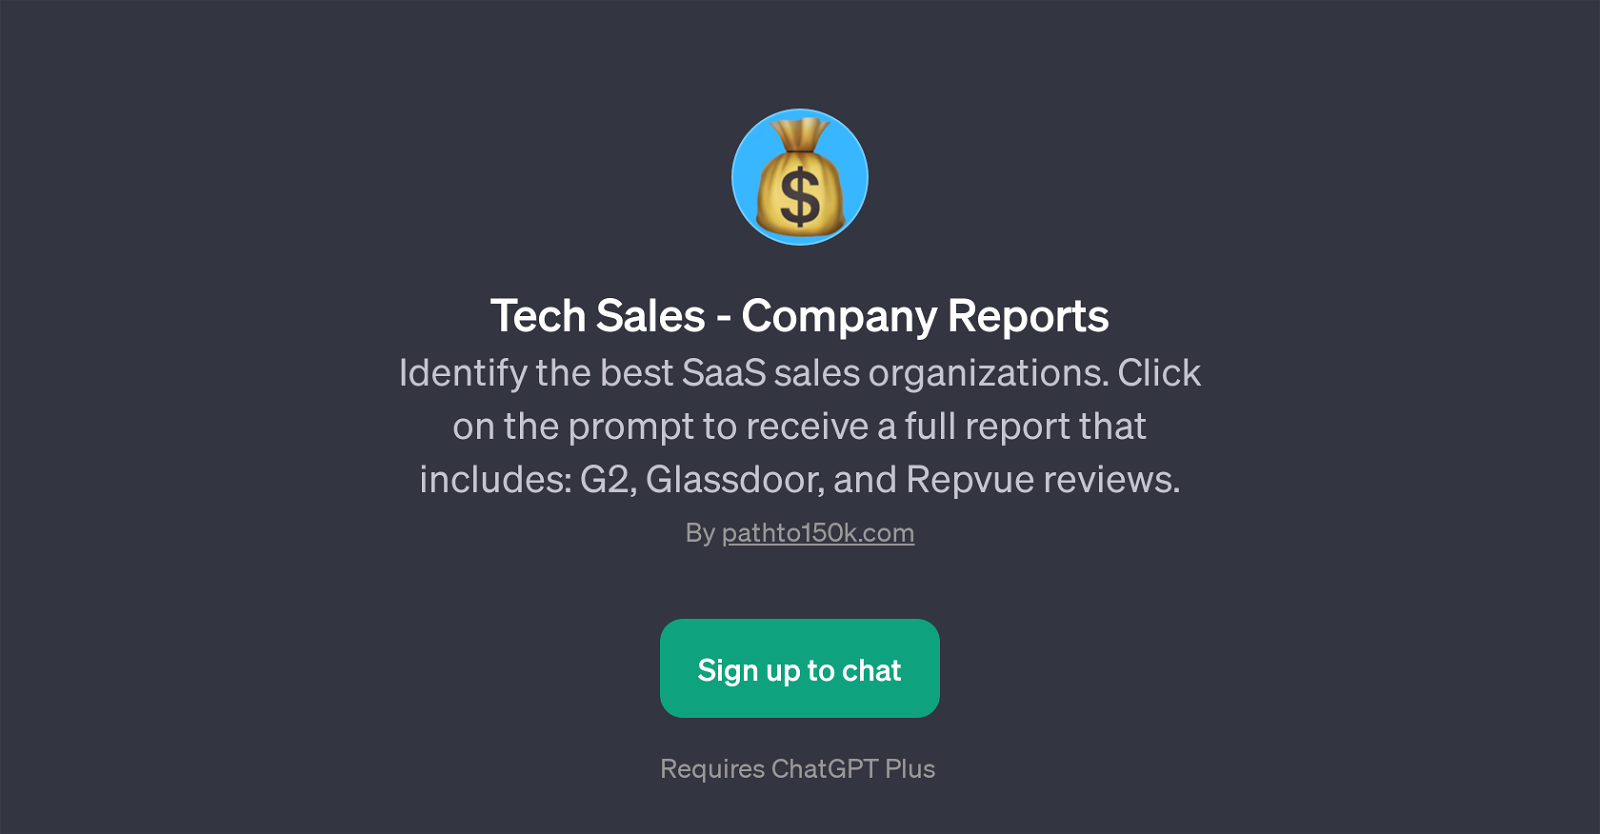 Tech Sales - Company Reports website